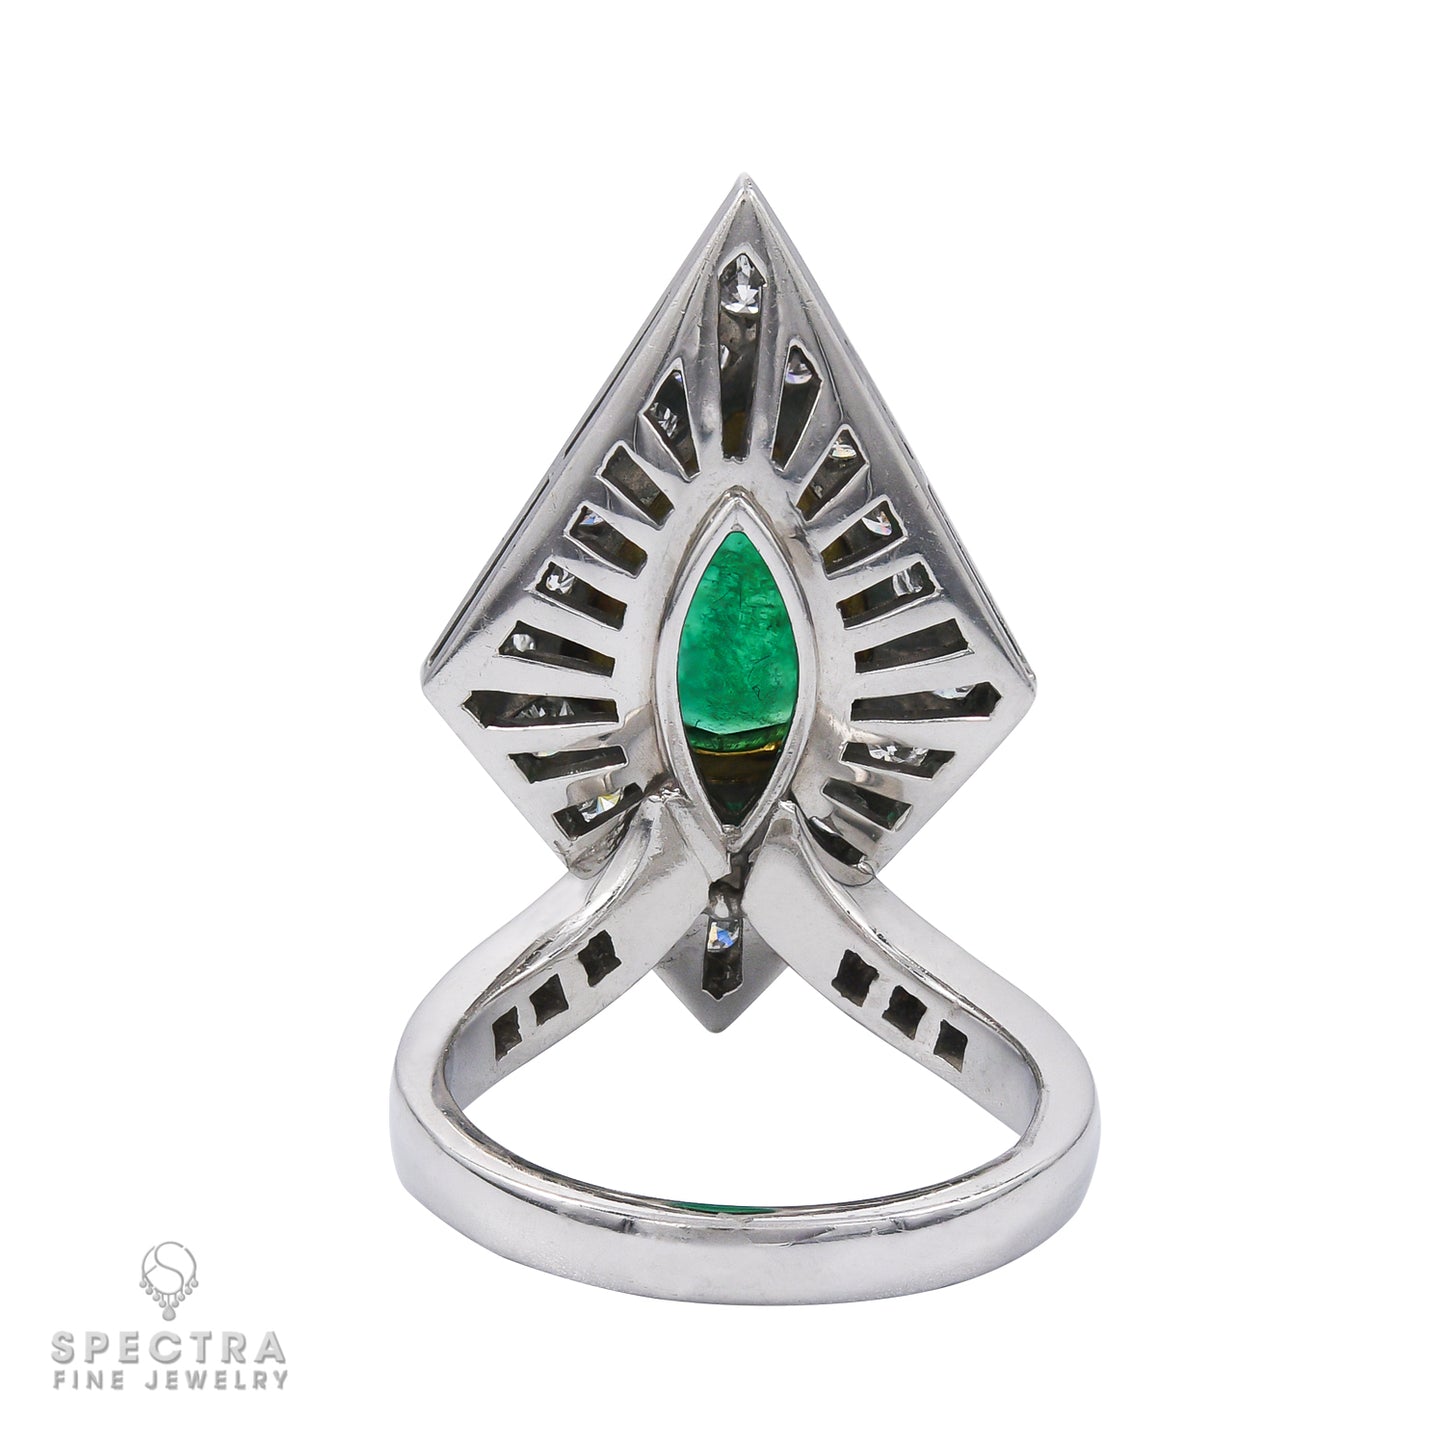 Spectra Fine Jewelry 3.0 ct. Emerald Diamond Pyramid Cocktail Ring